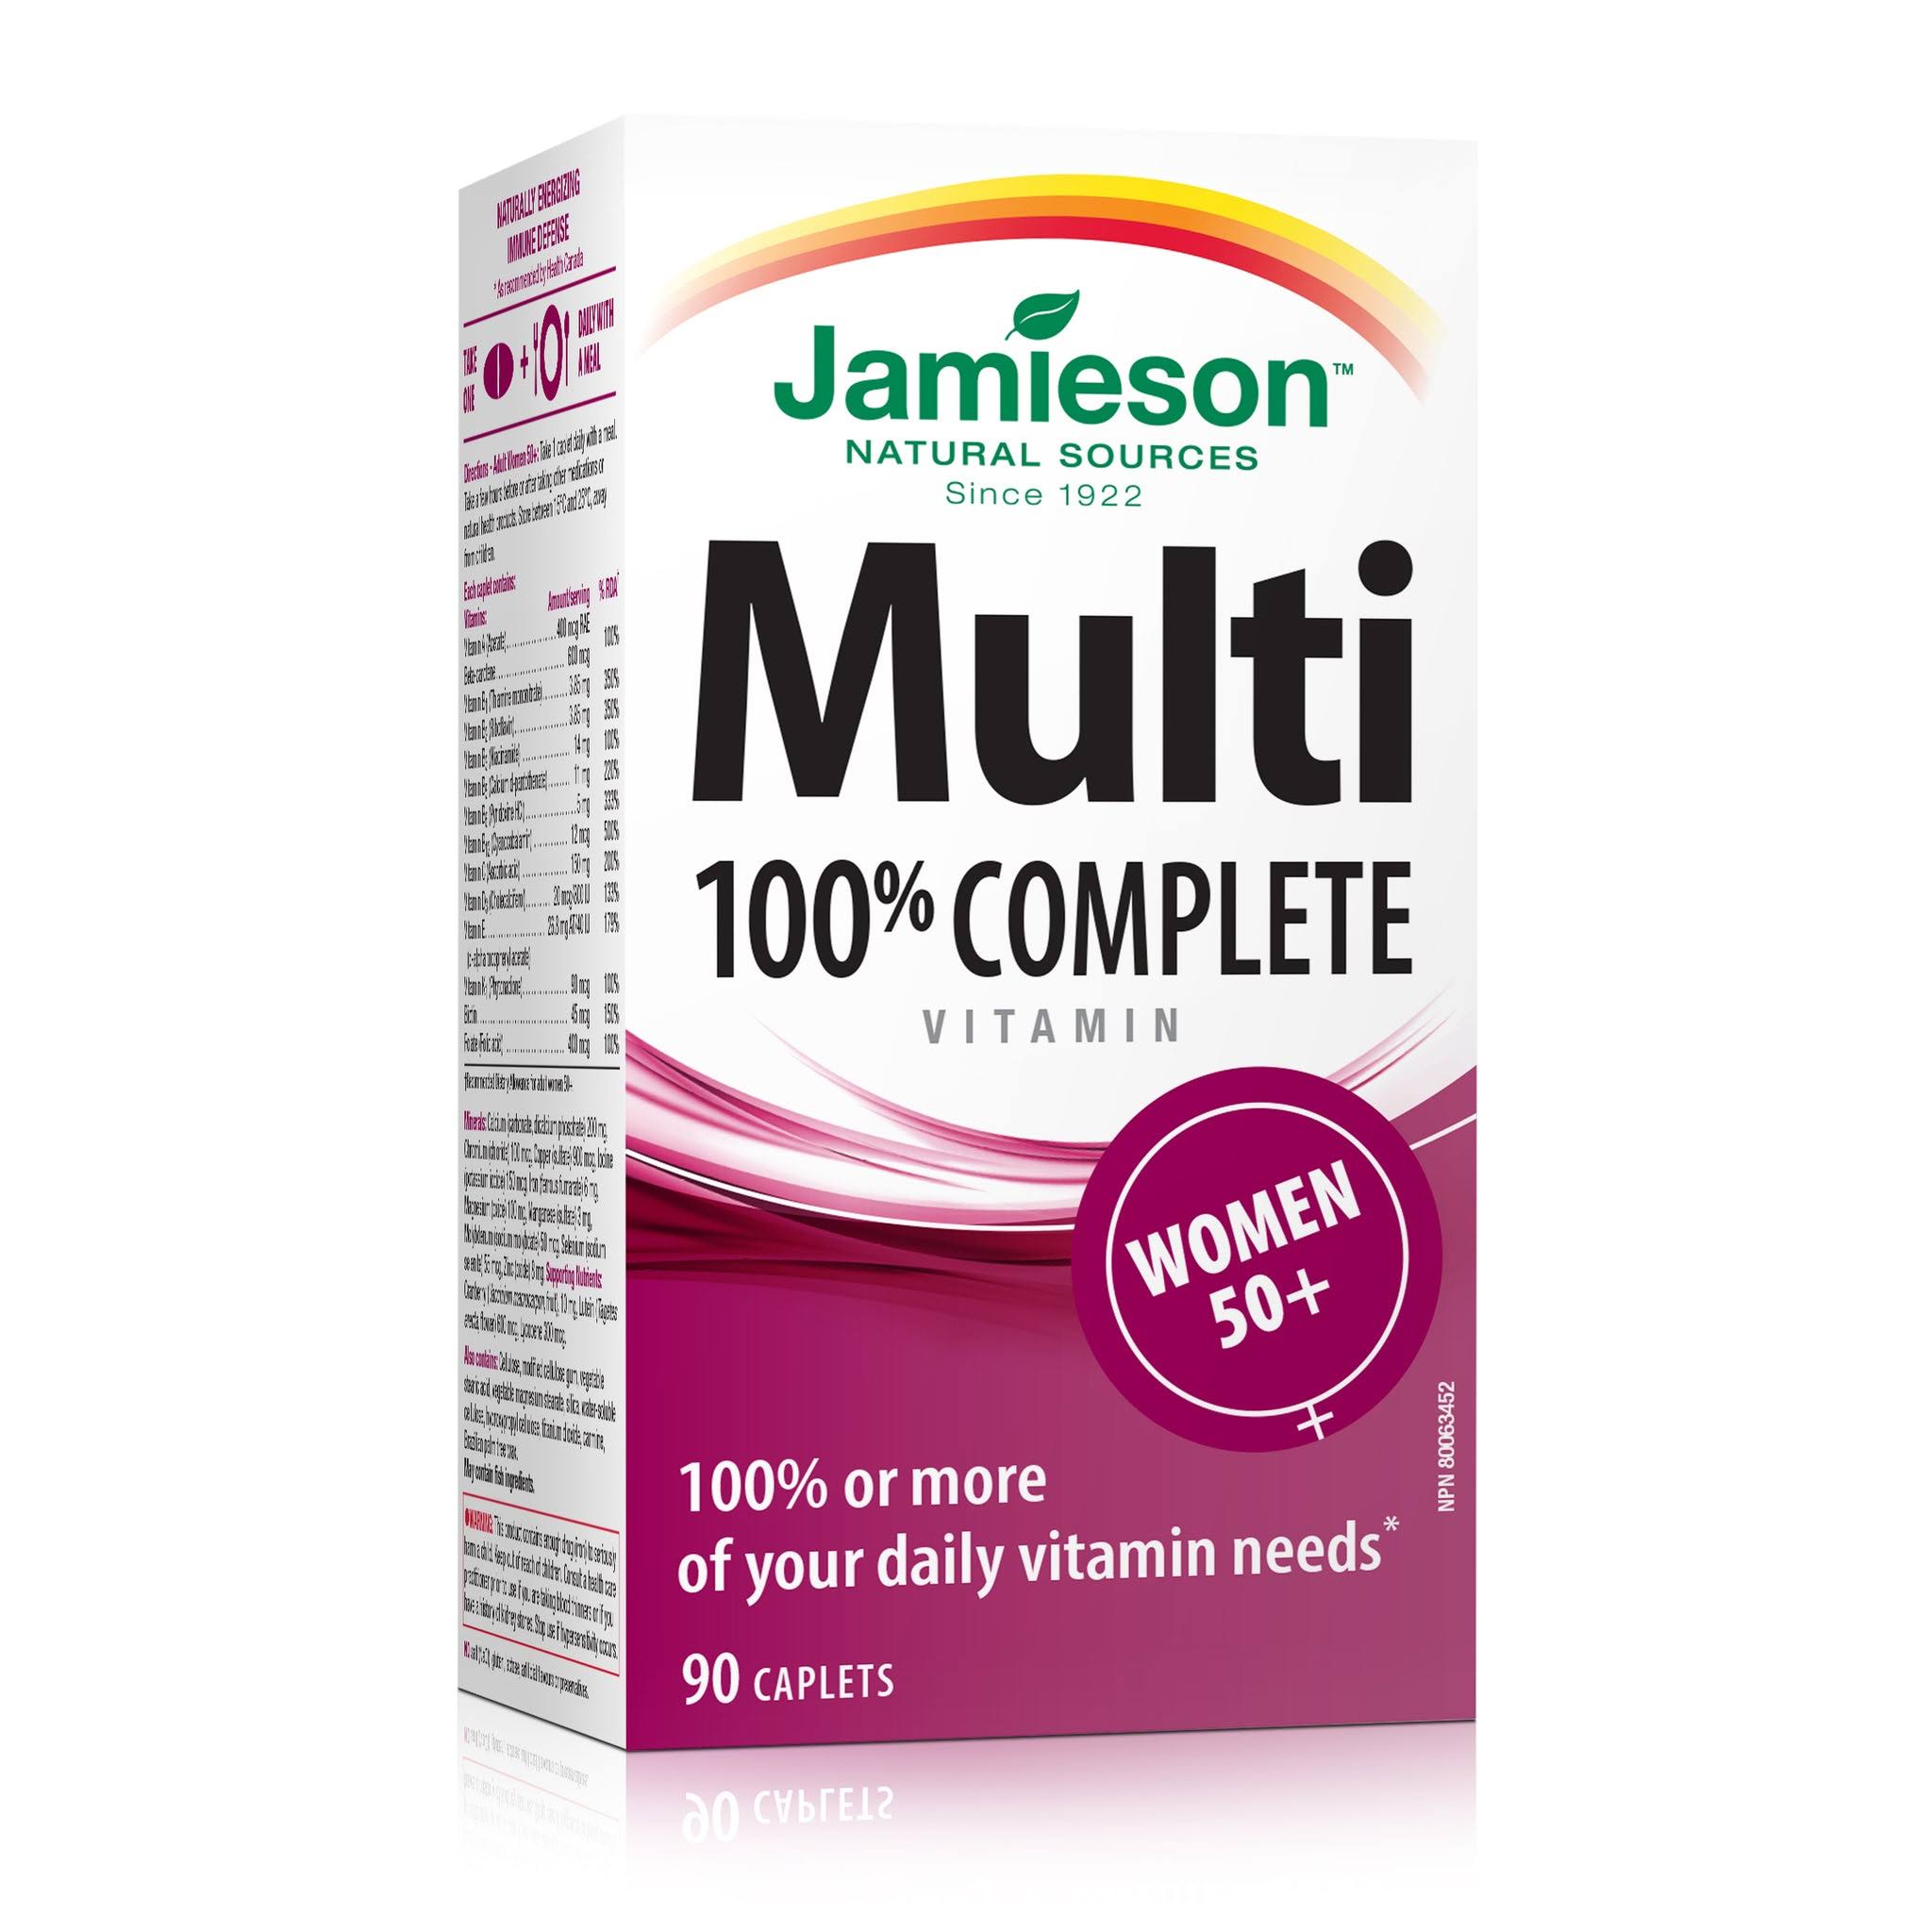 Jamieson 100% Complete Multivitamin for Women 50+ 90 Caplets